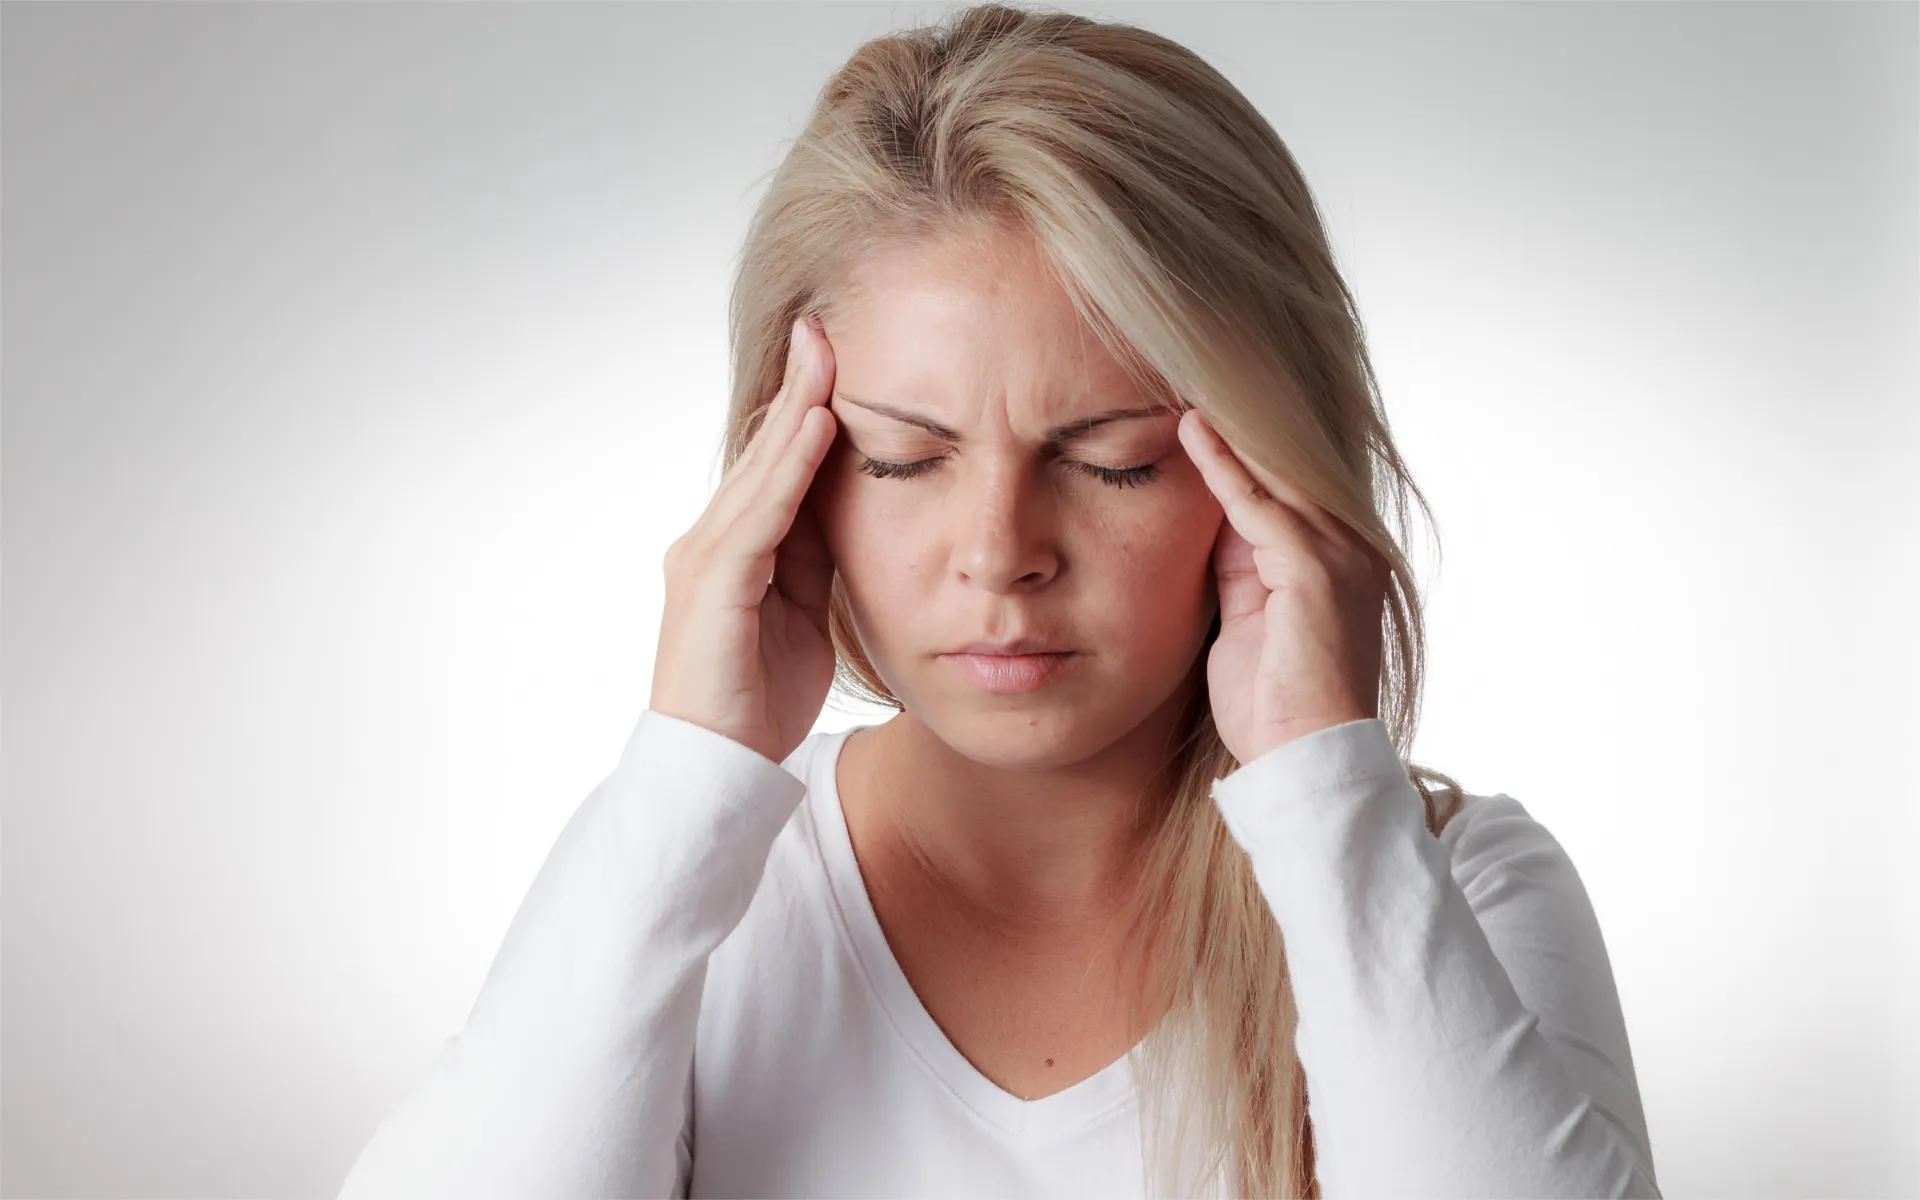 15 Helpful Ways to Combat Headaches